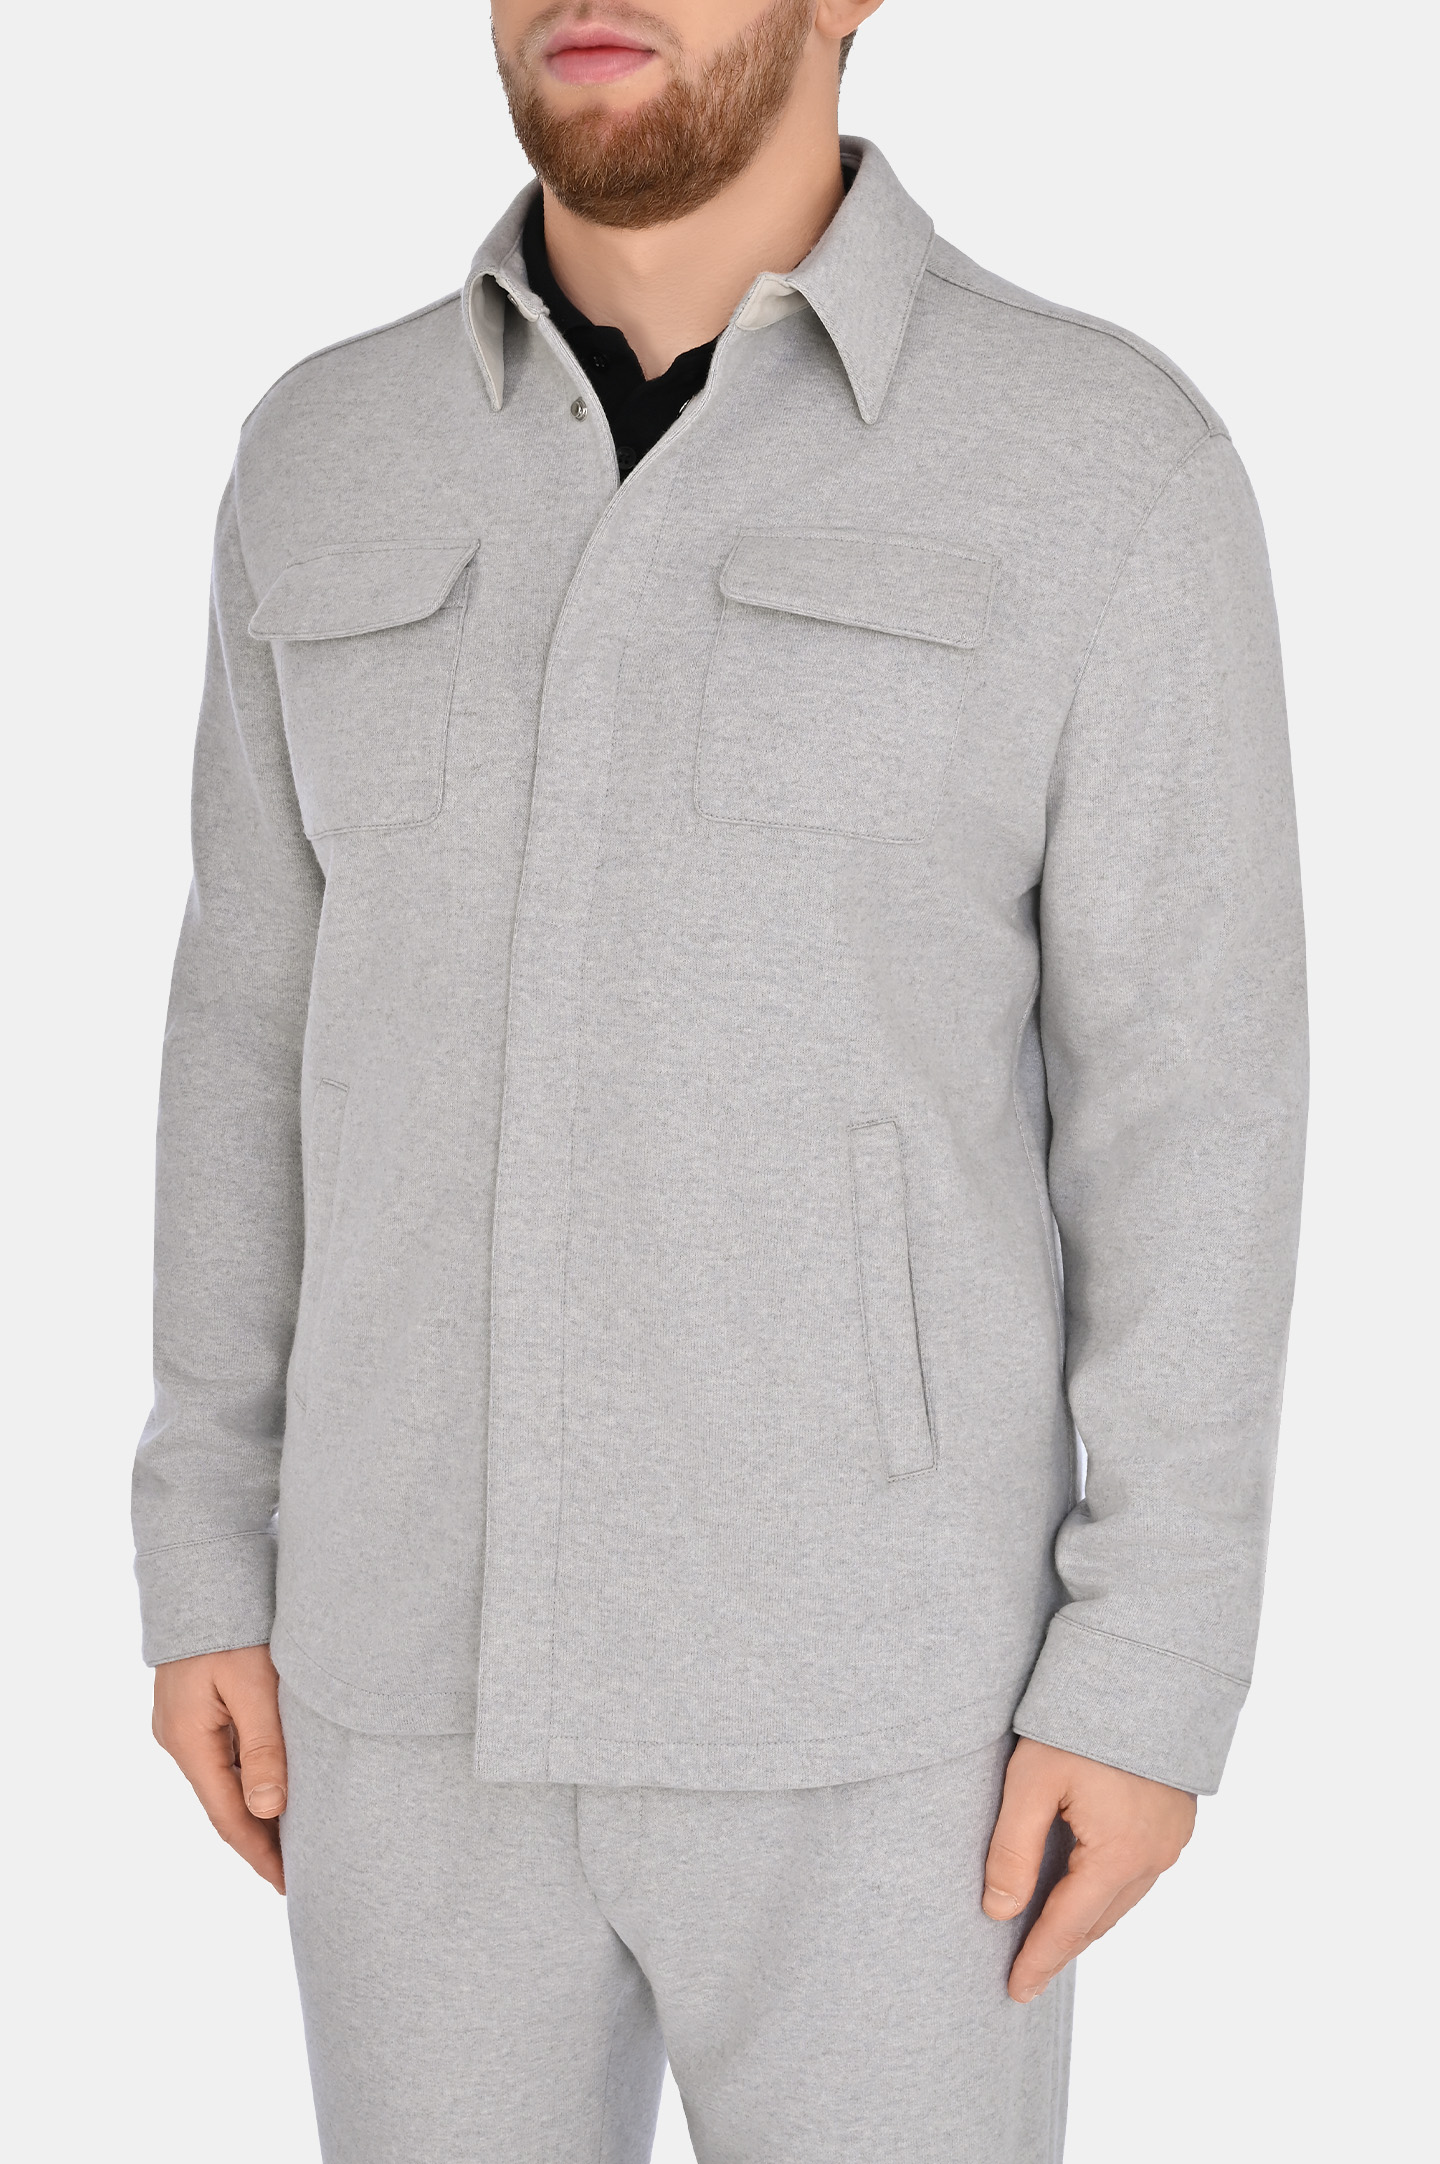 Куртка MANDELLI A23-A7T727-5239, цвет: Серый, Мужской